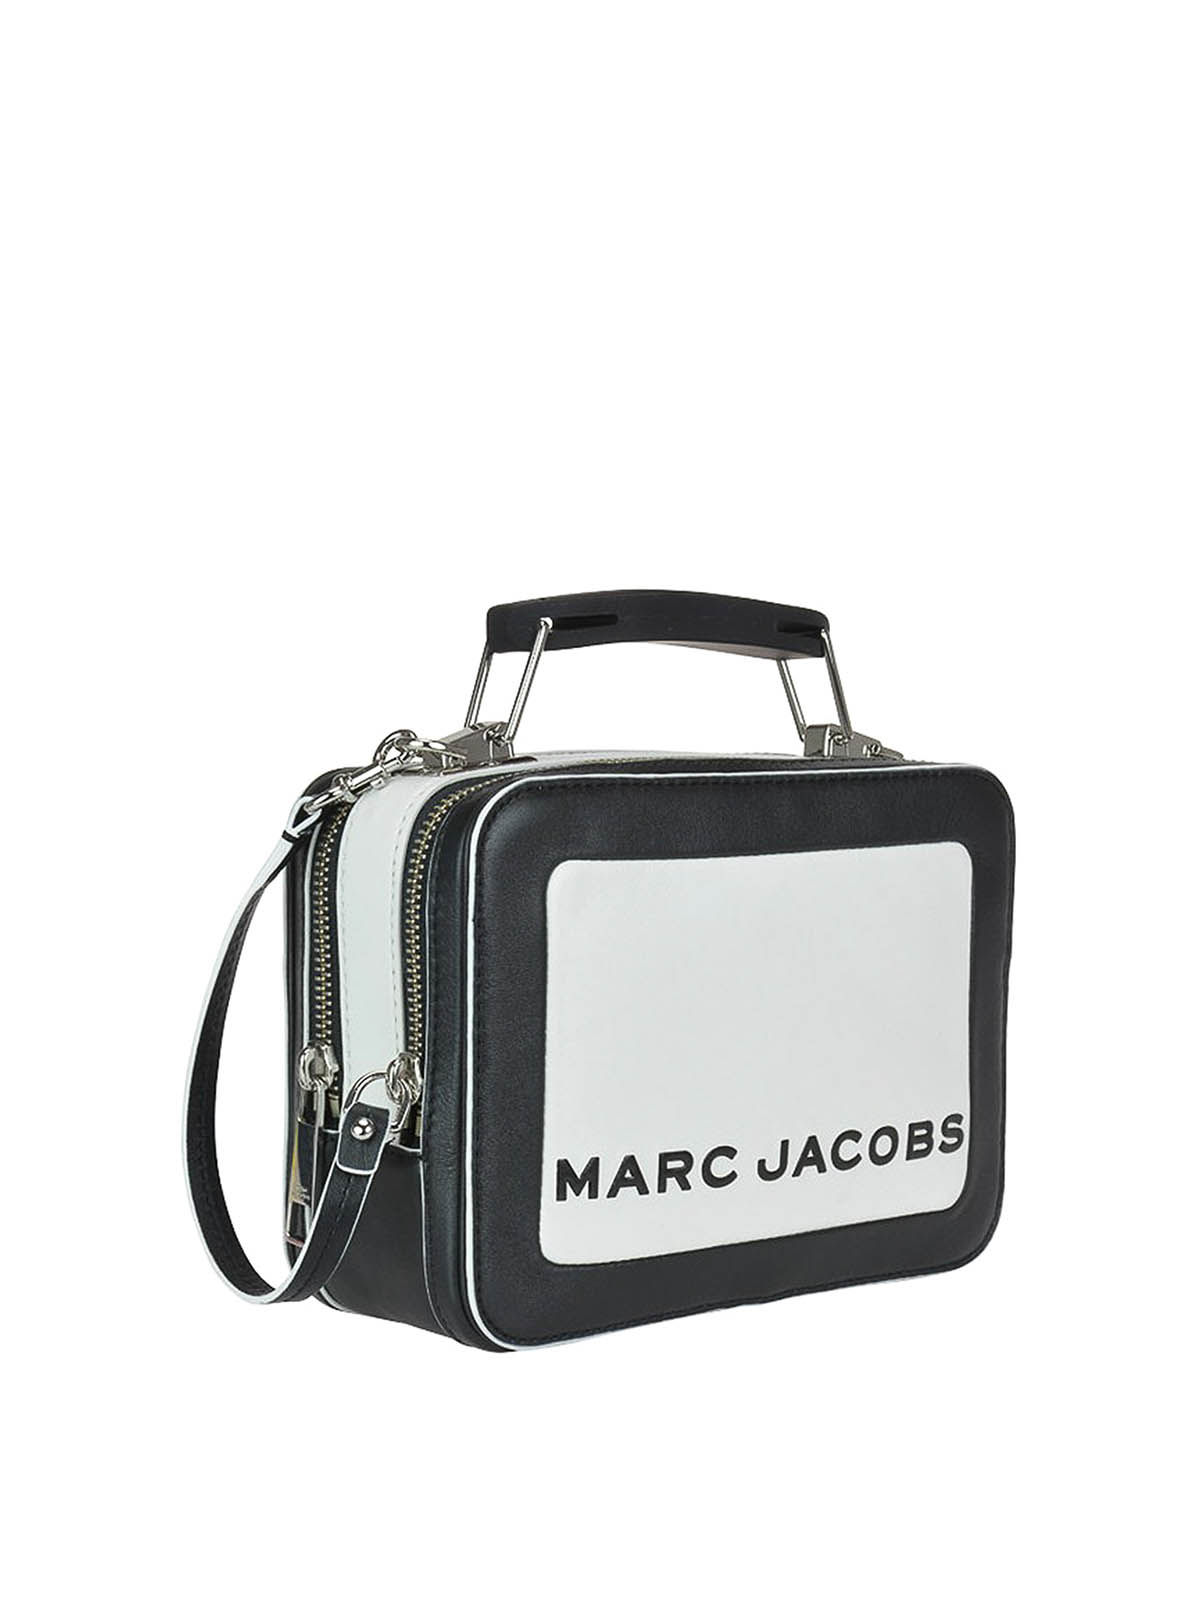 Cross body bags Marc Jacobs - The Colorblocked Mini Box cross body